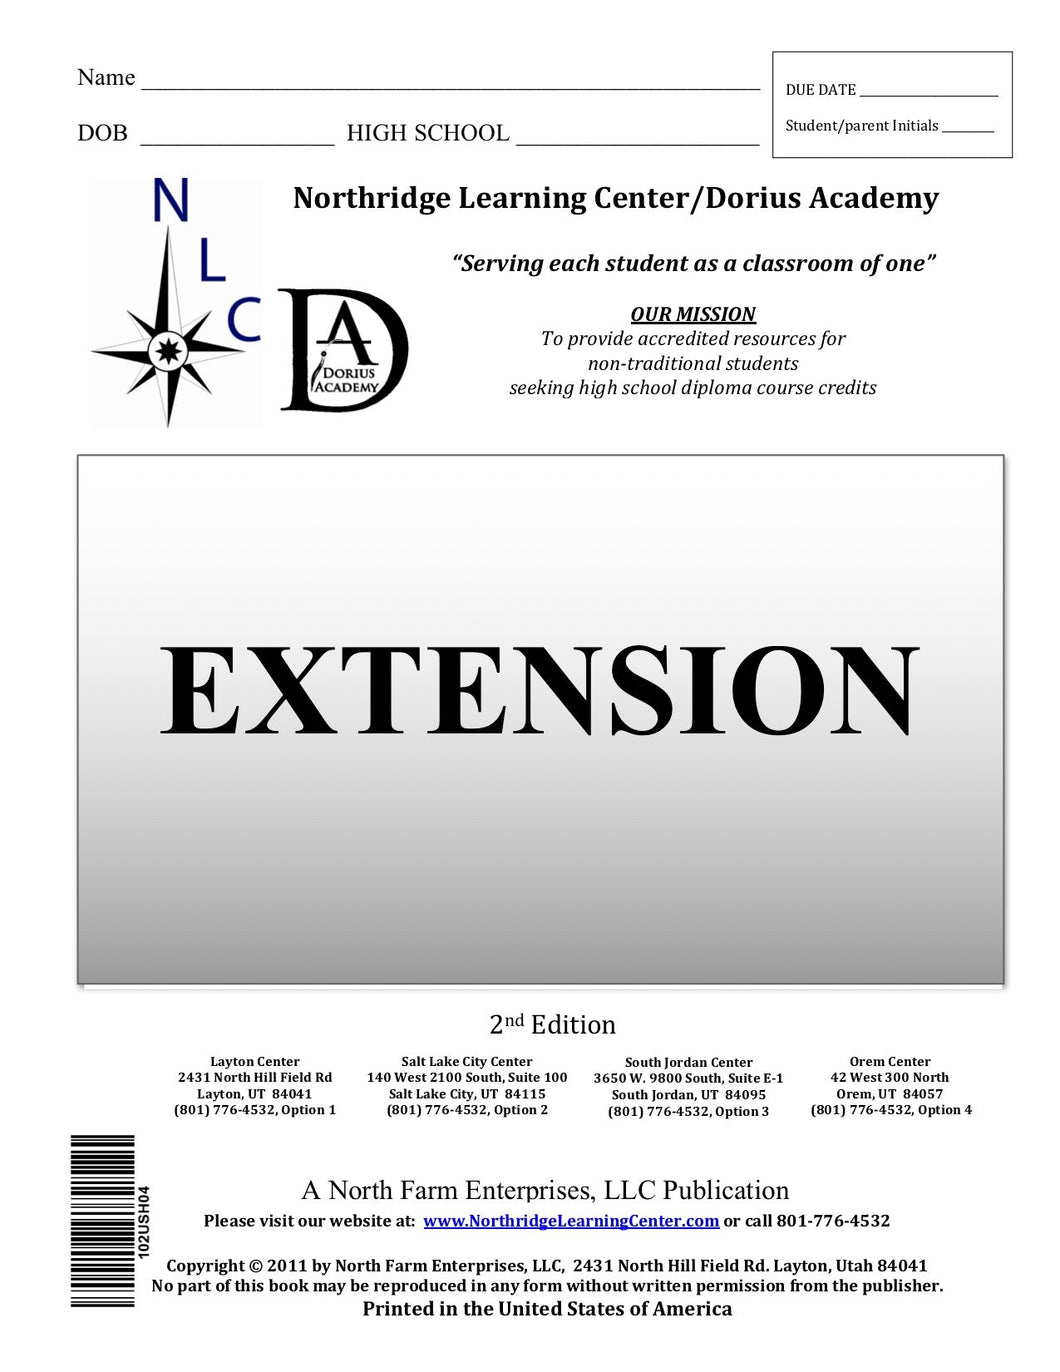 Language Arts 12, Section IV - Extension